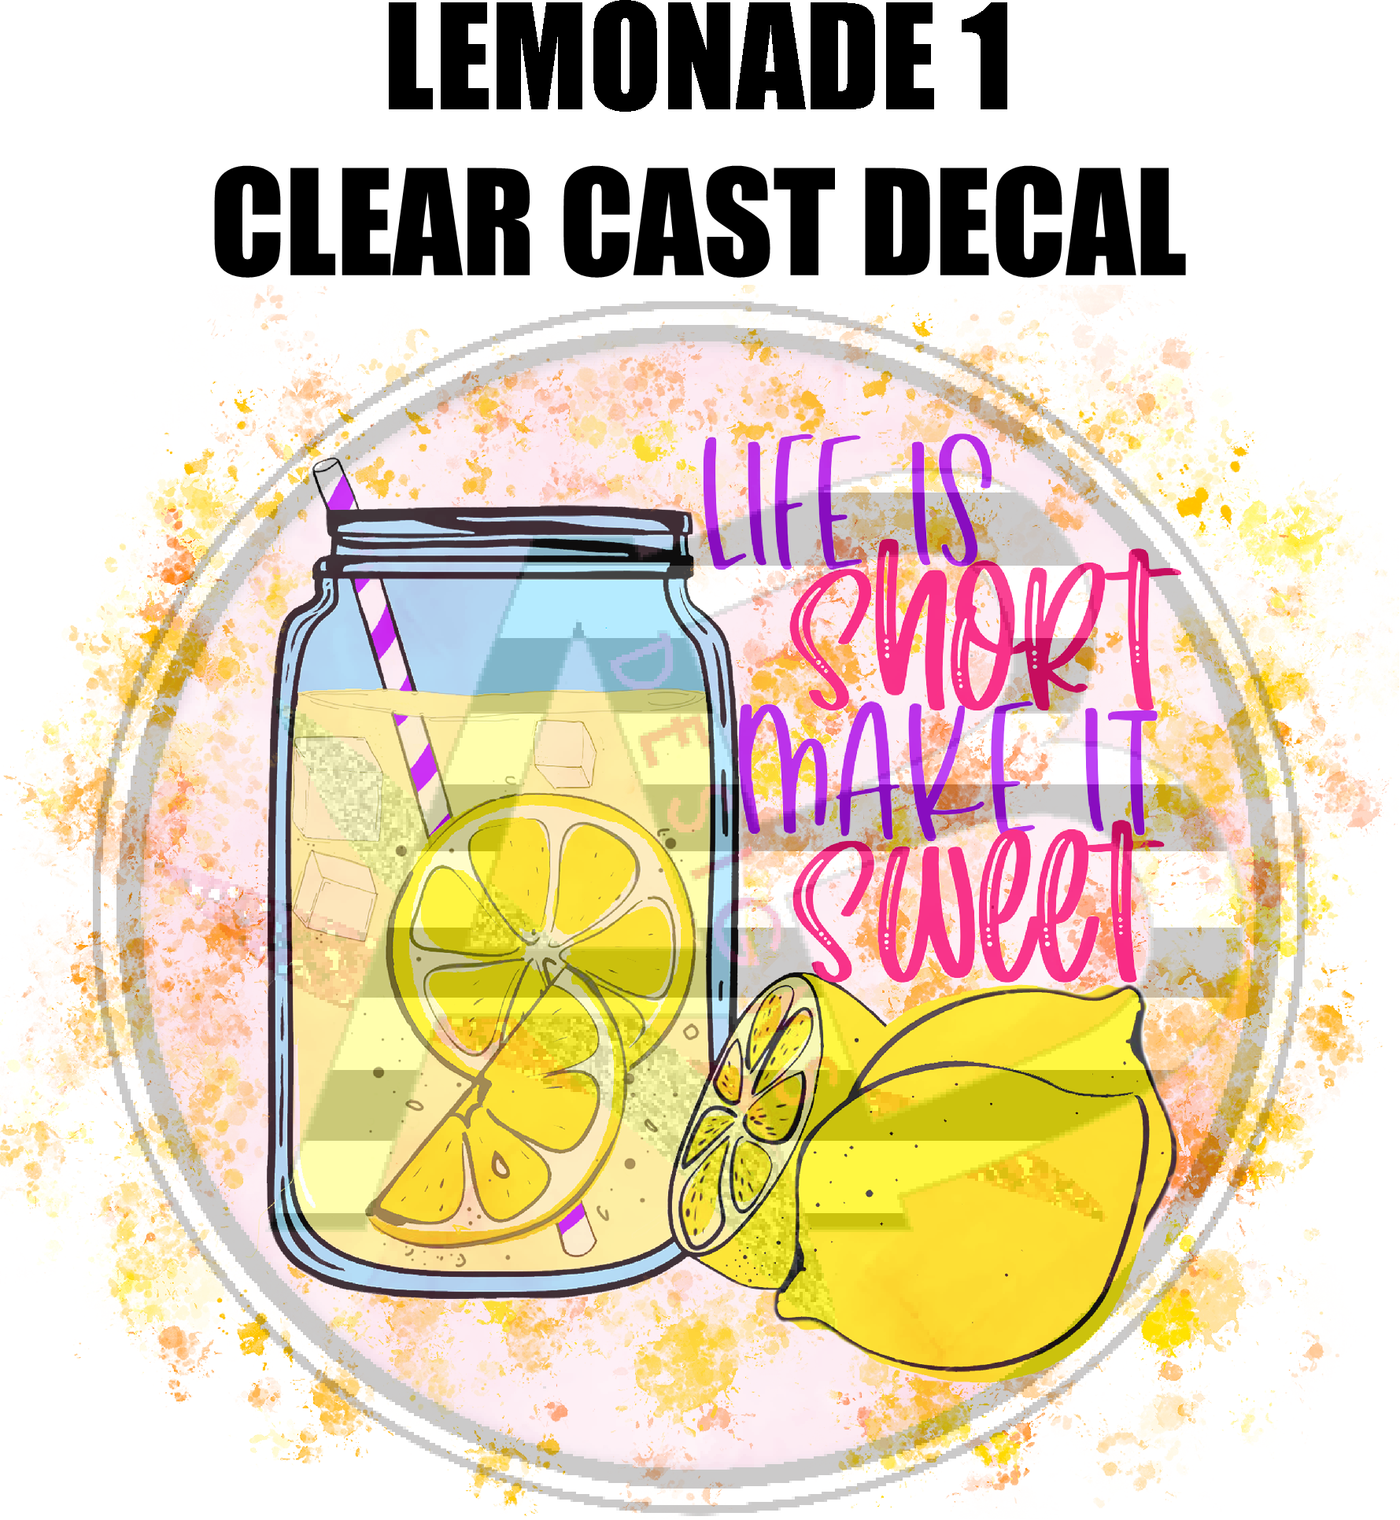 Lemonade 1 - Clear Cast Decal